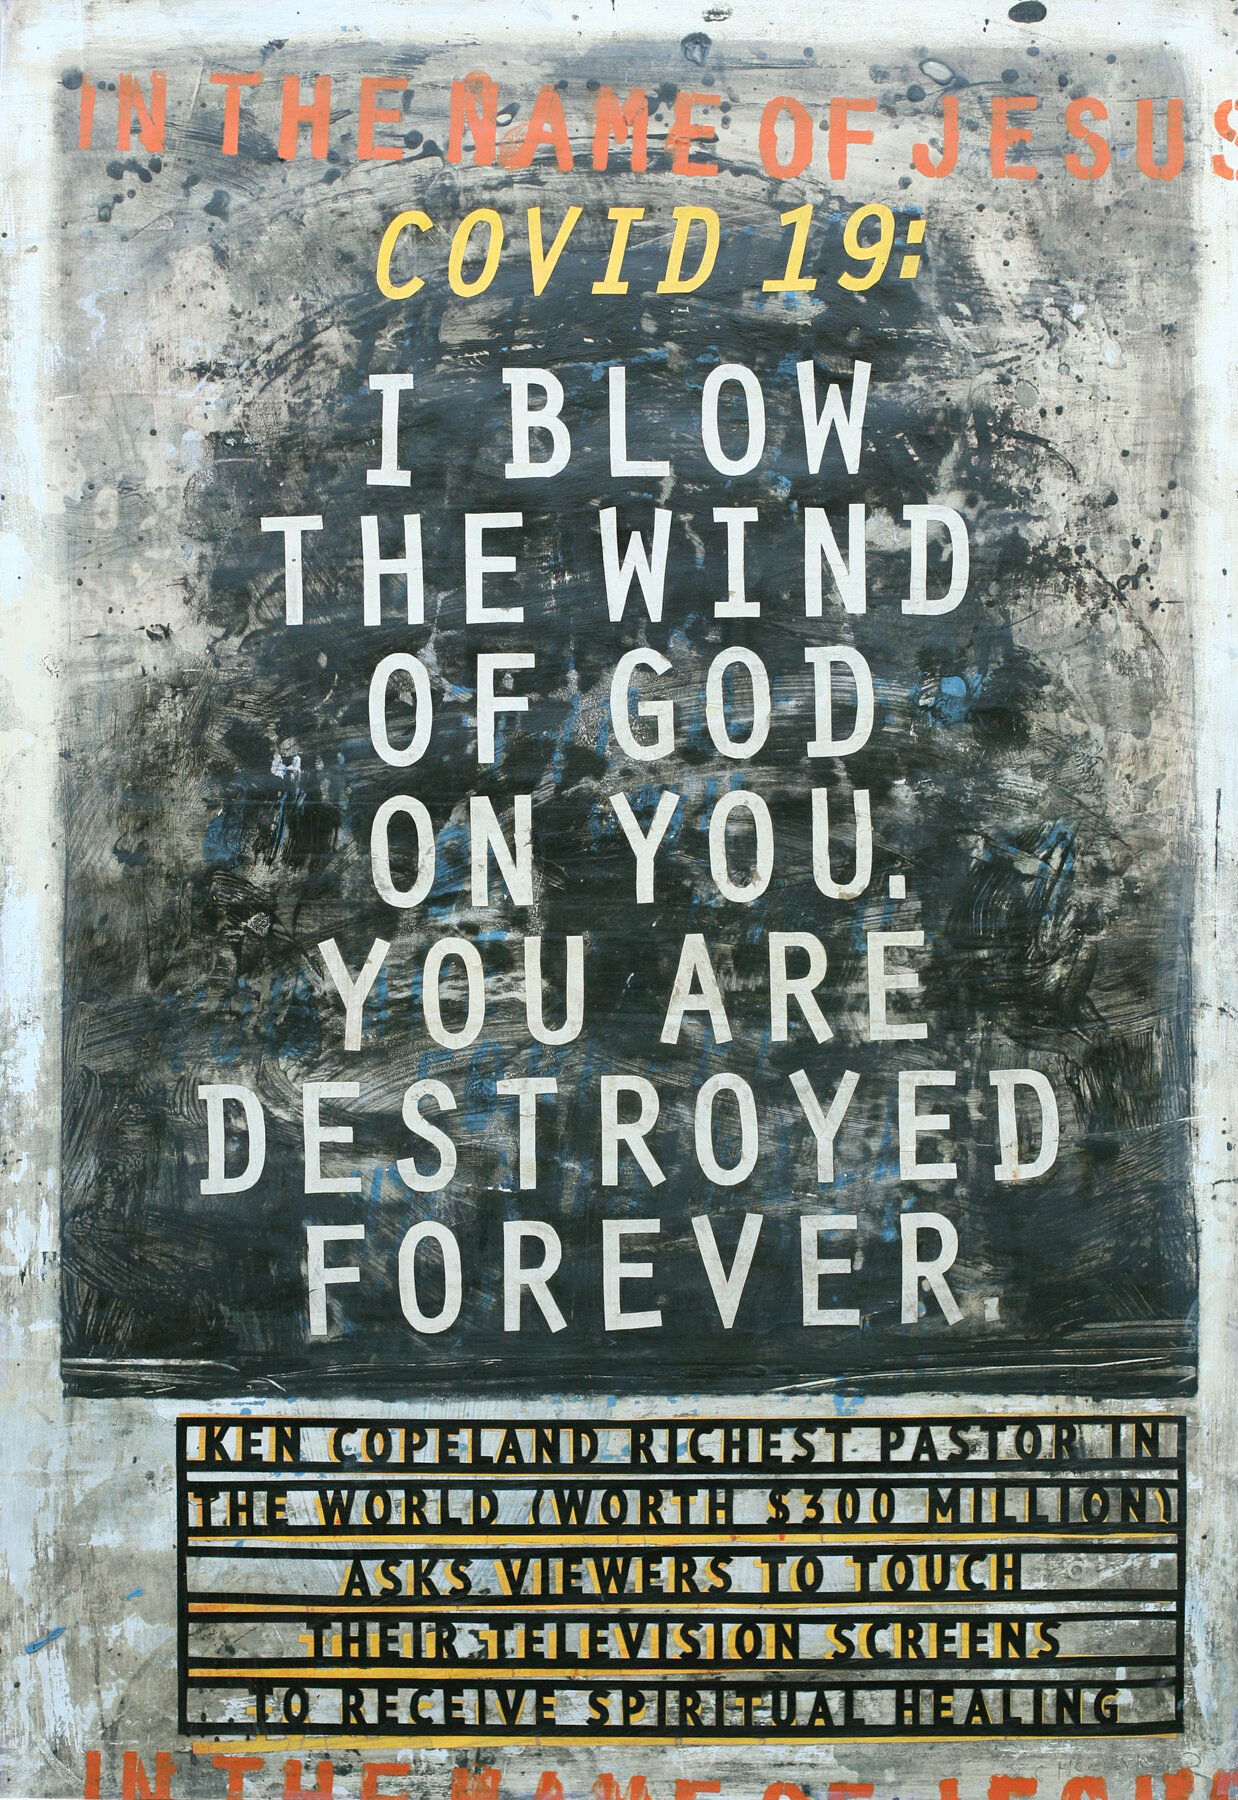 Wind of God